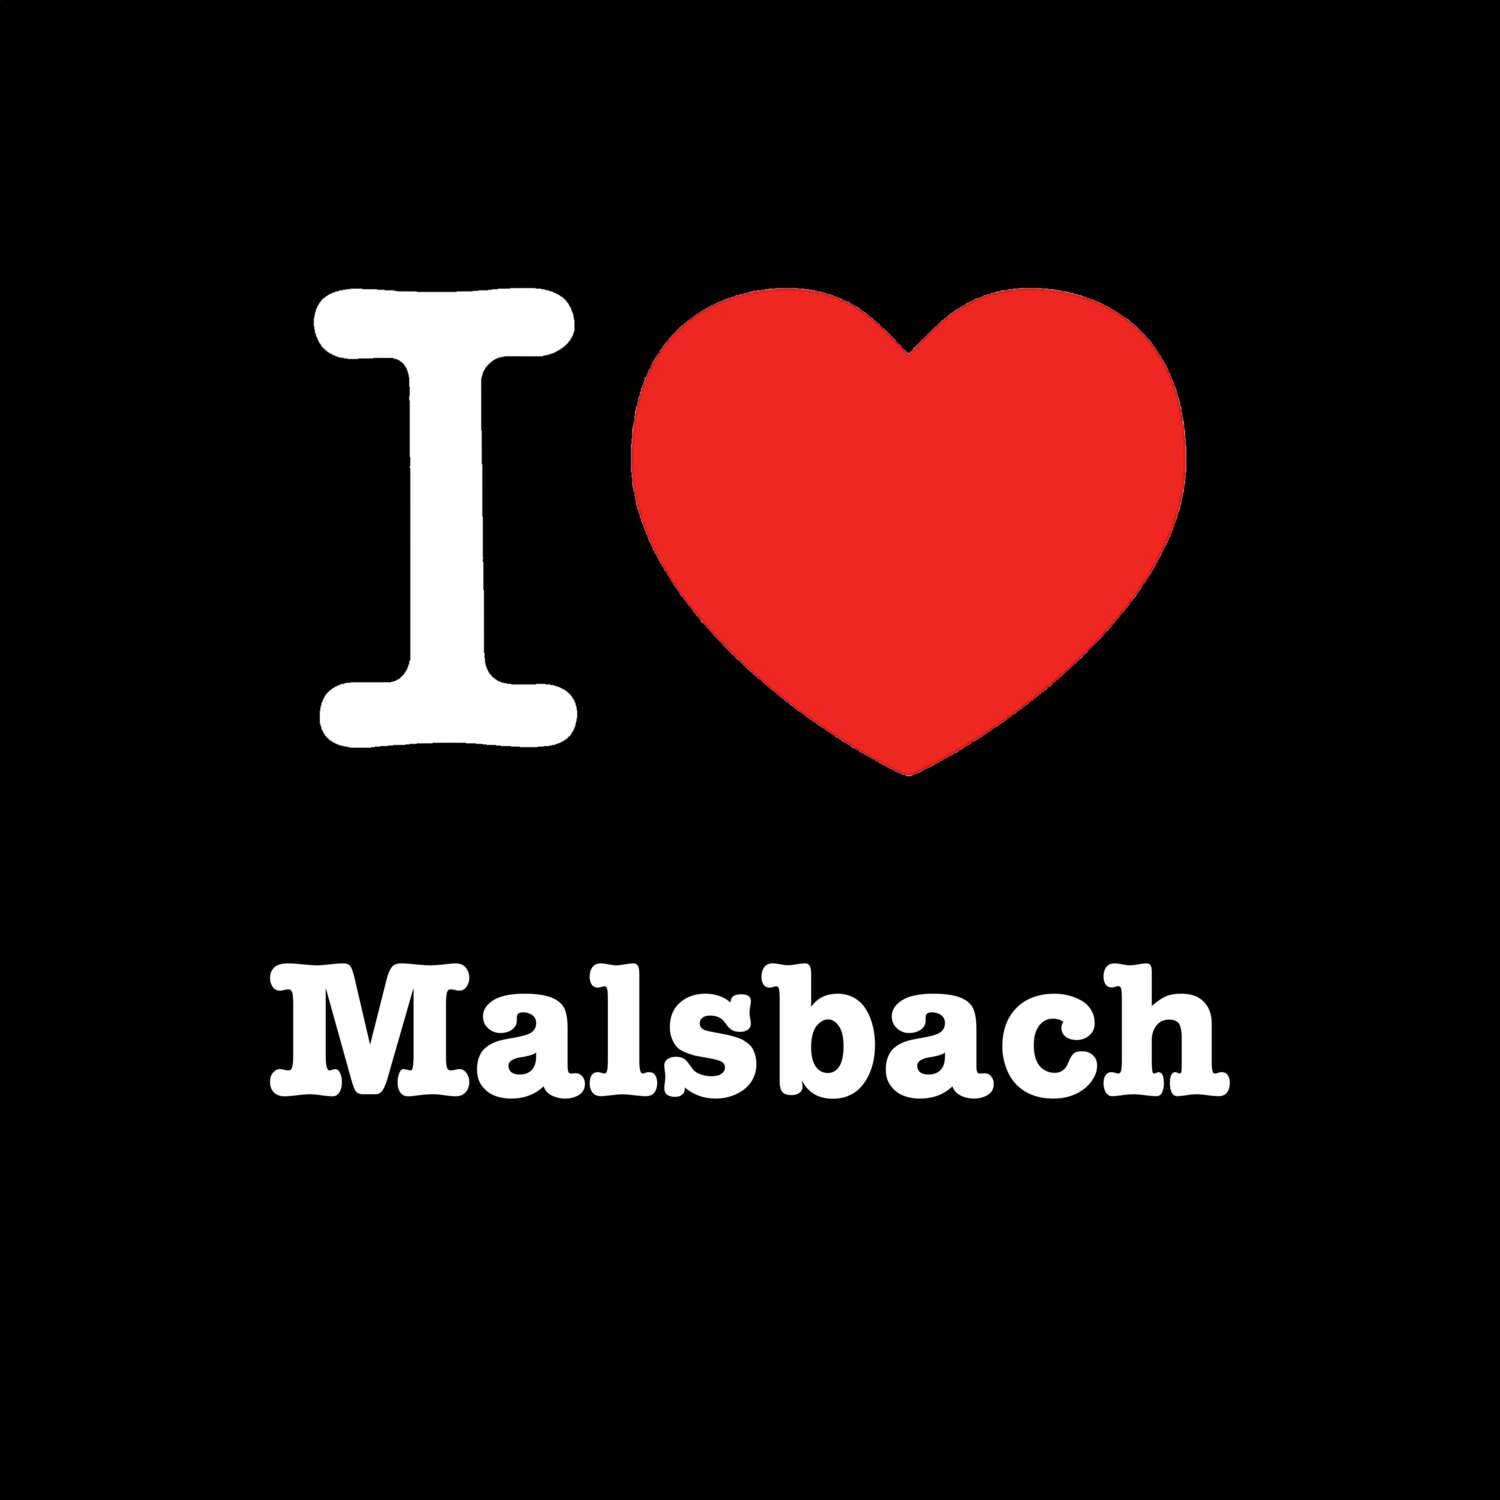 Malsbach T-Shirt »I love«